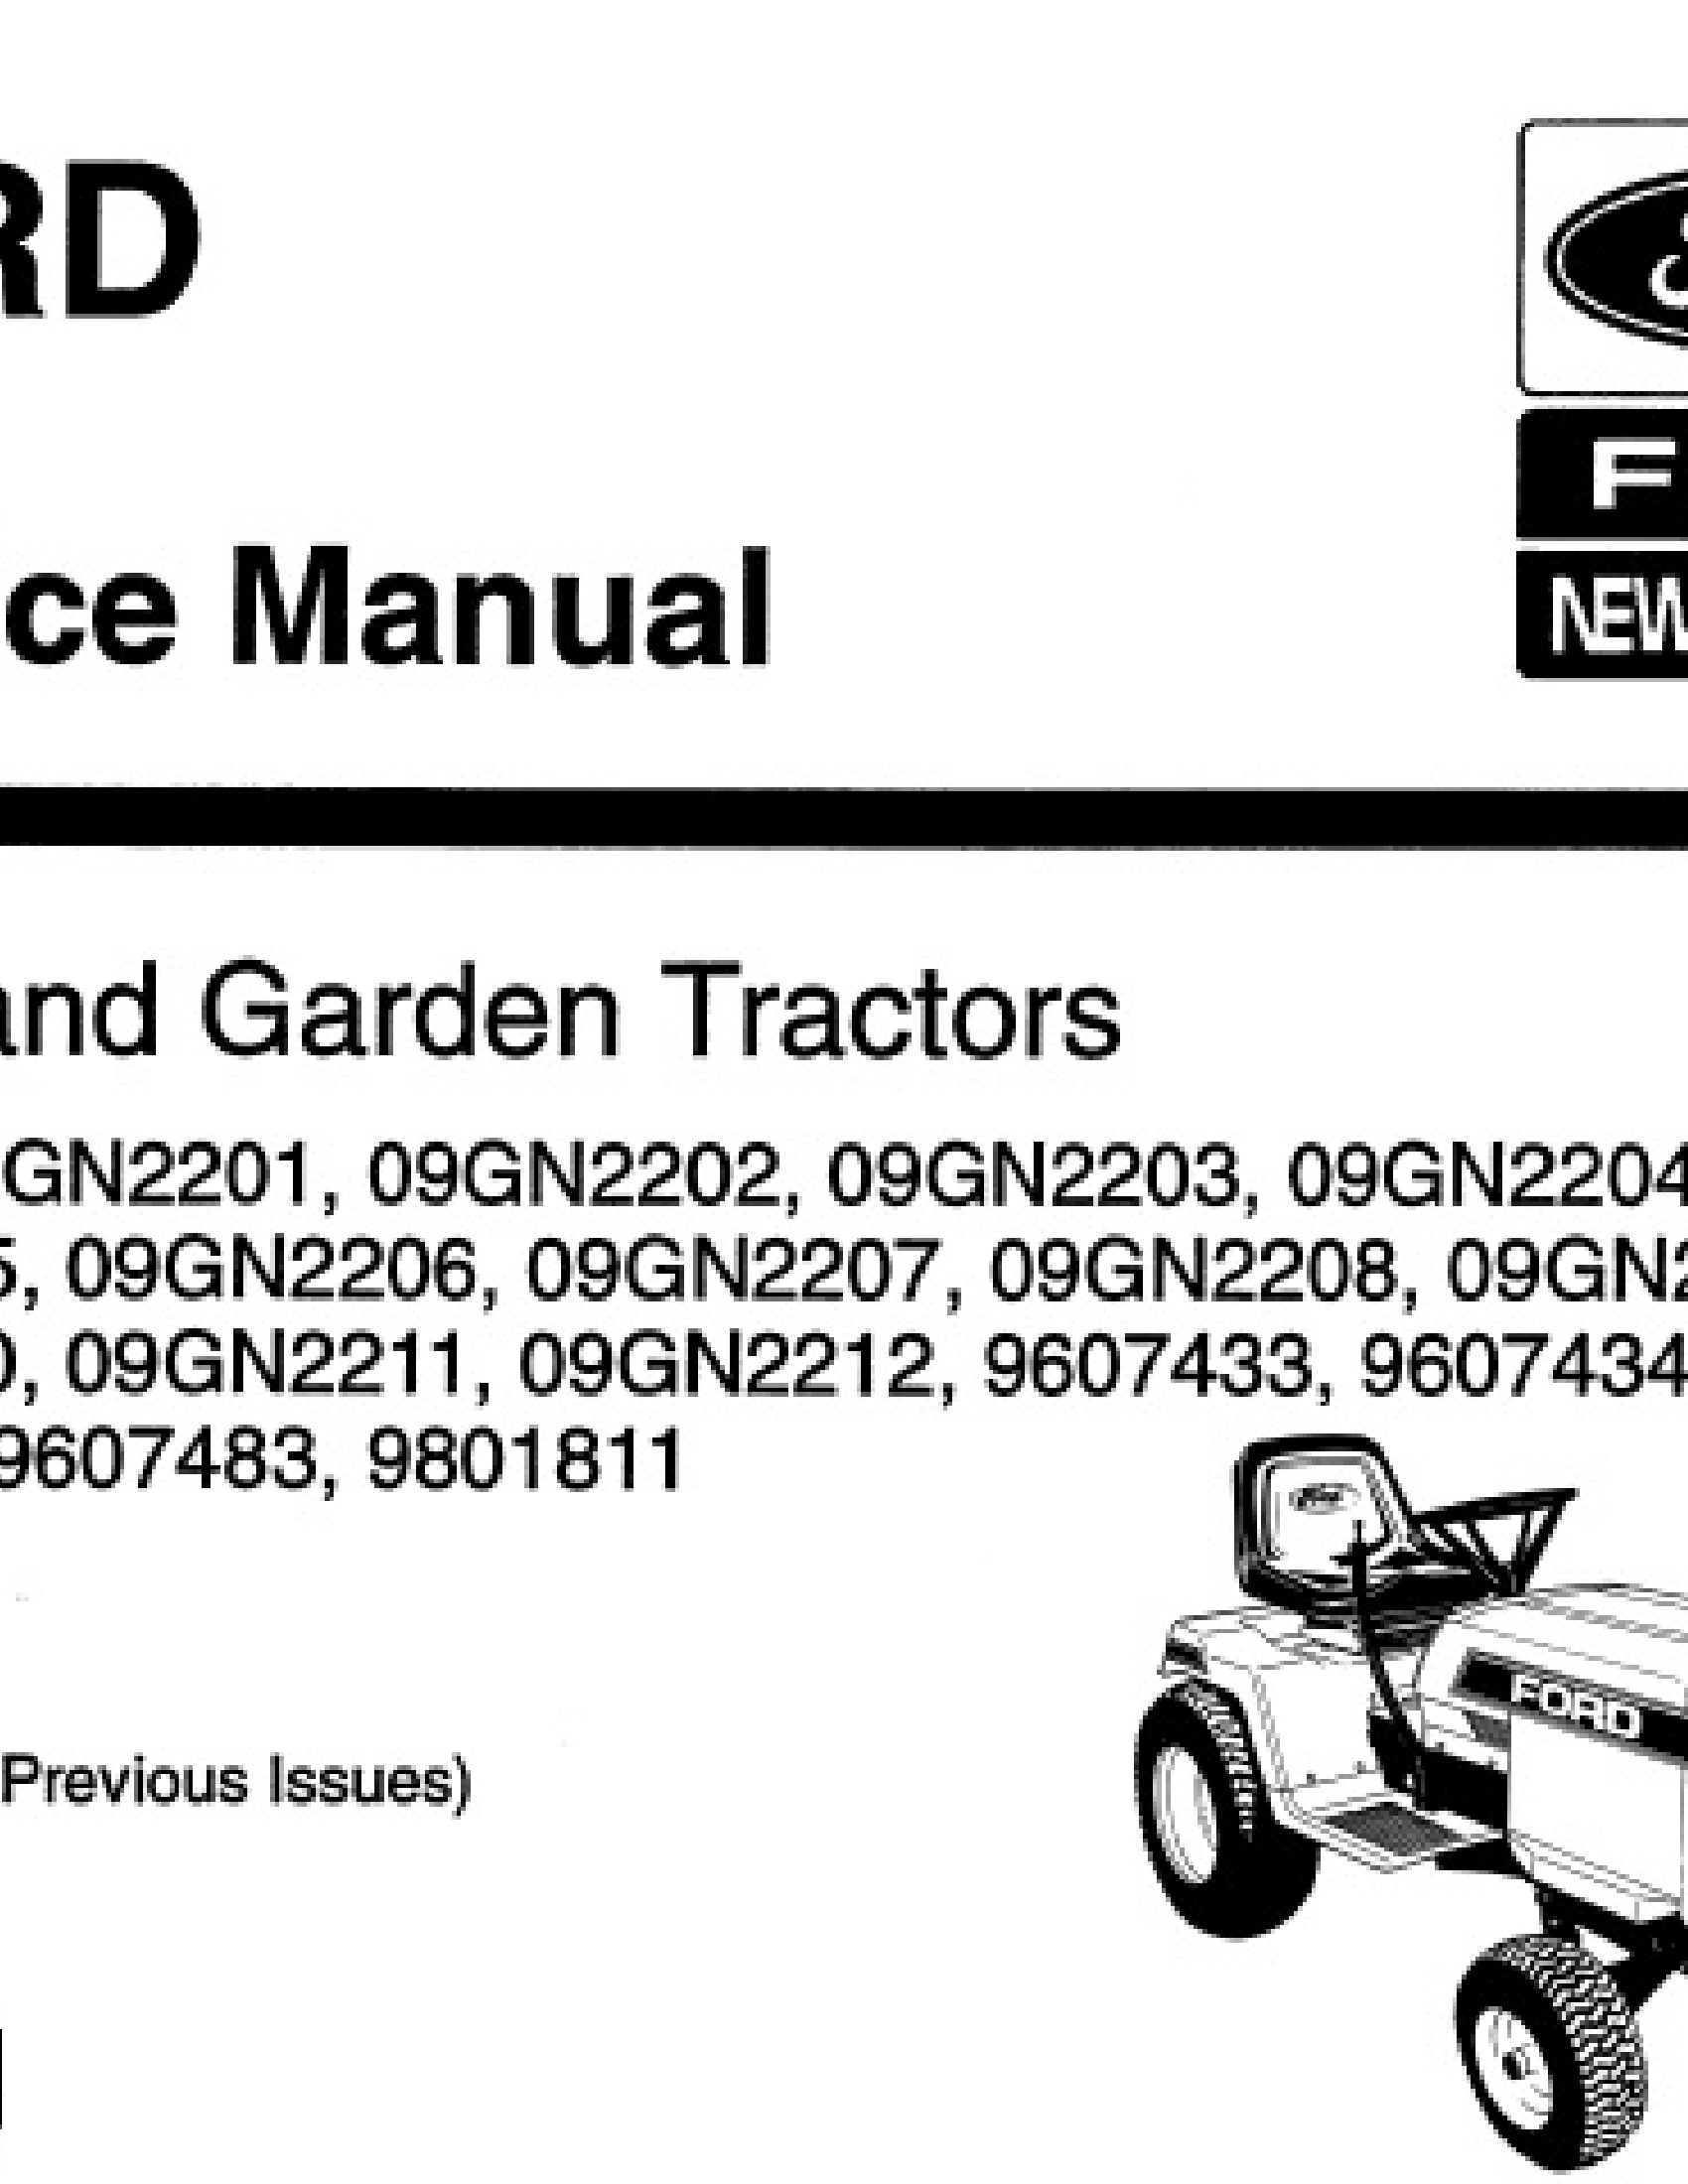  09GN2201 Lawn  Garden Tractors manual